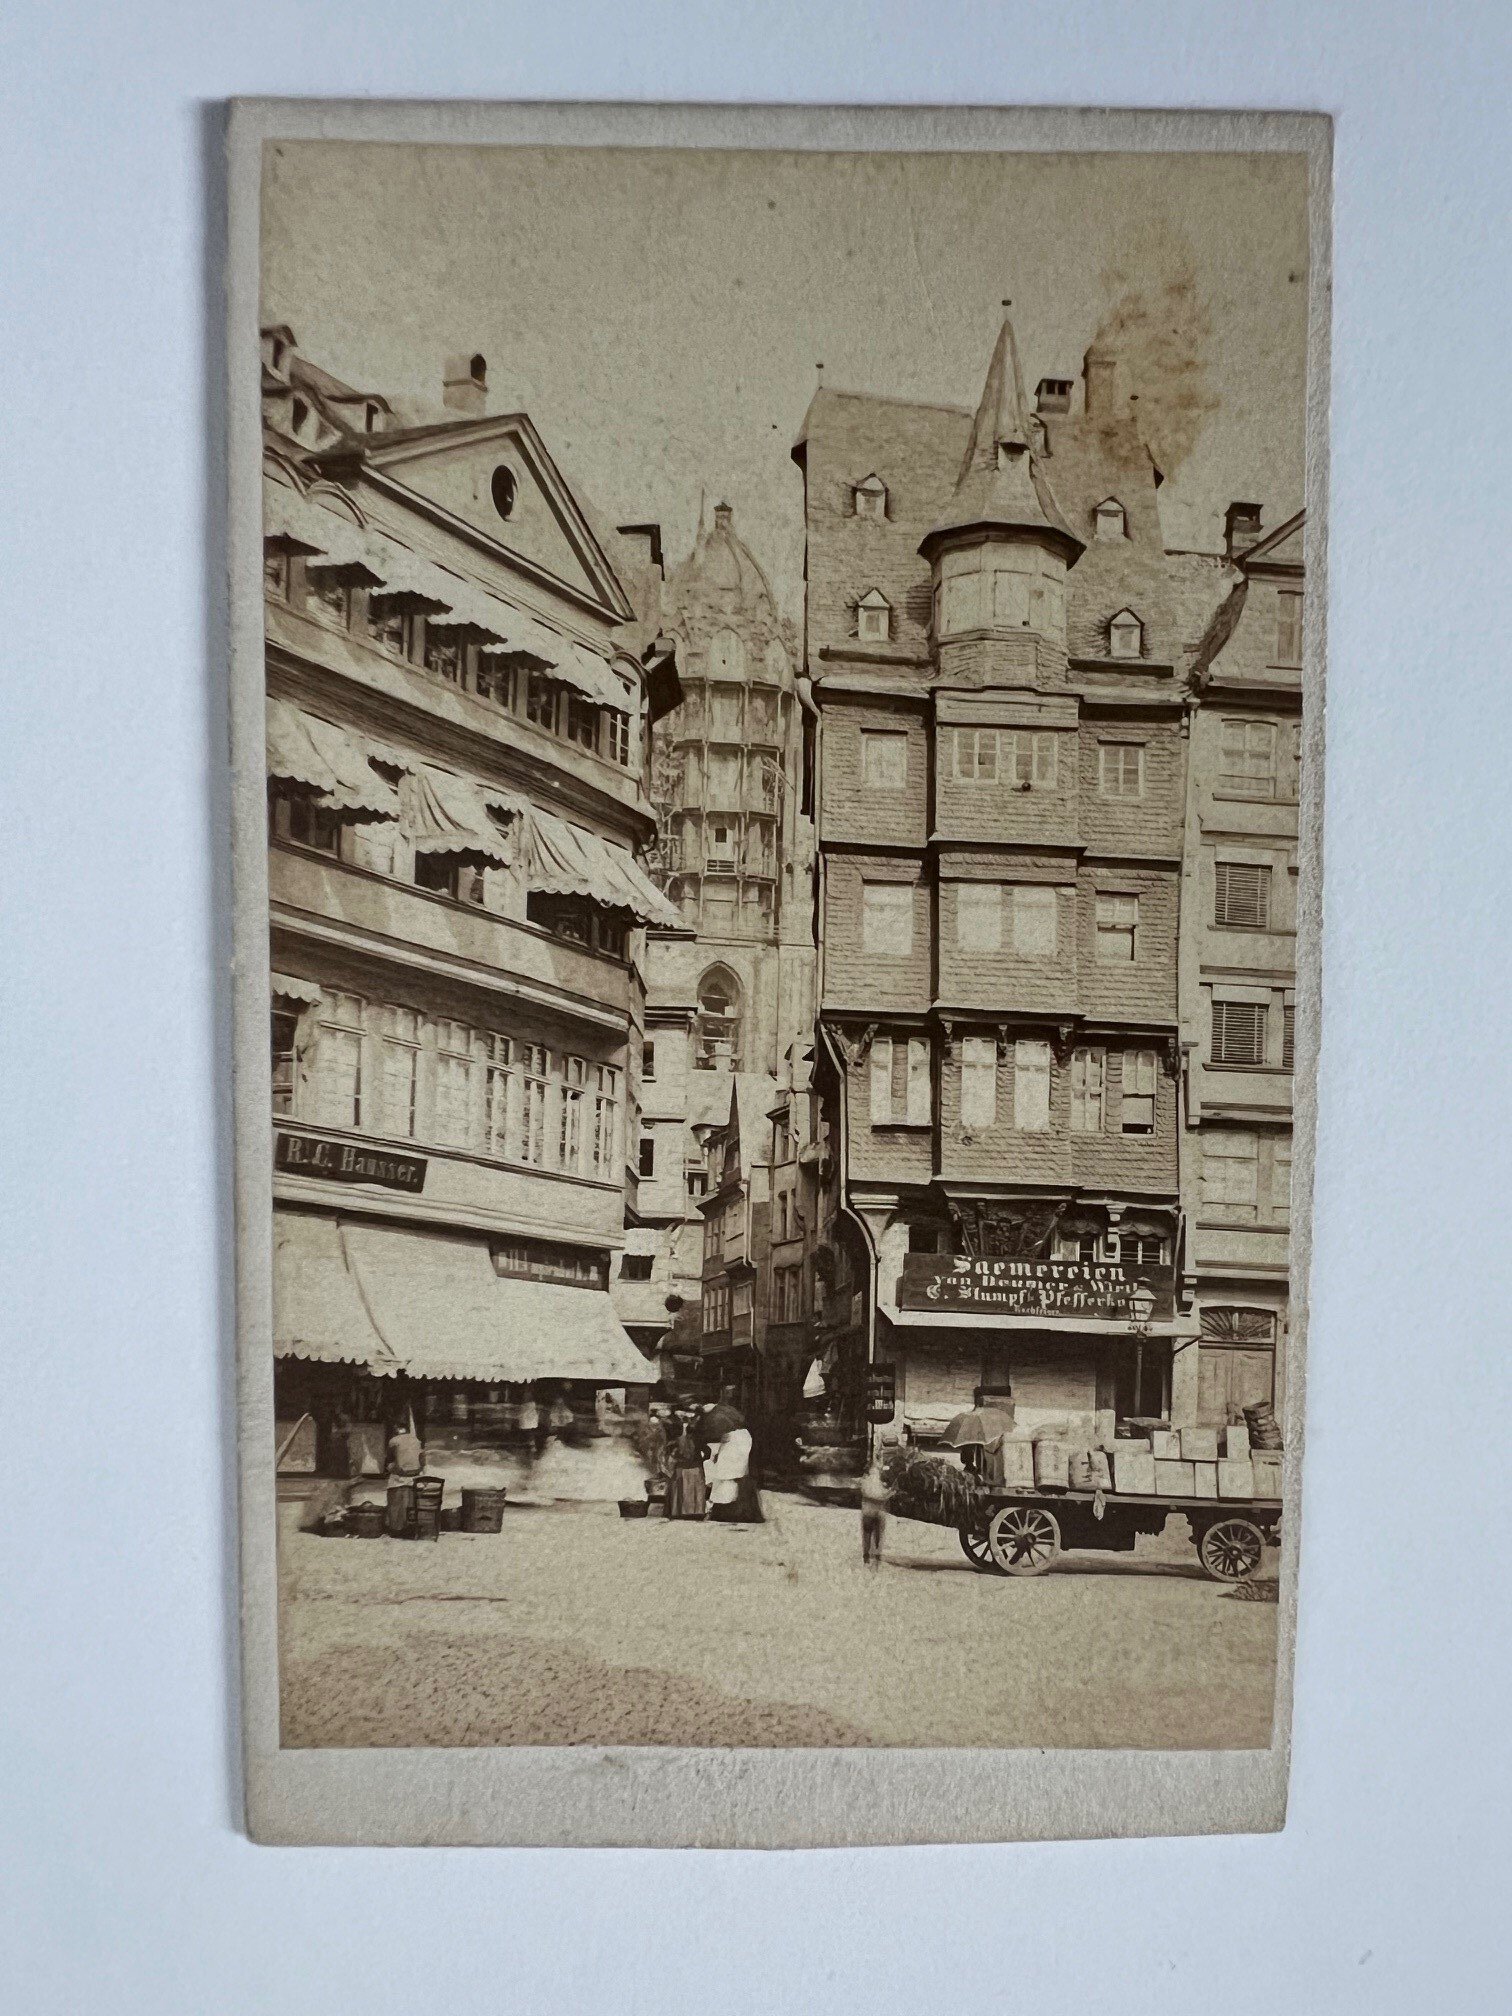 CdV, Theodor Creifelds, Frankfurt, Nr. 279, Dom, ca. 1870. (Taunus-Rhein-Main - Regionalgeschichtliche Sammlung Dr. Stefan Naas CC BY-NC-SA)